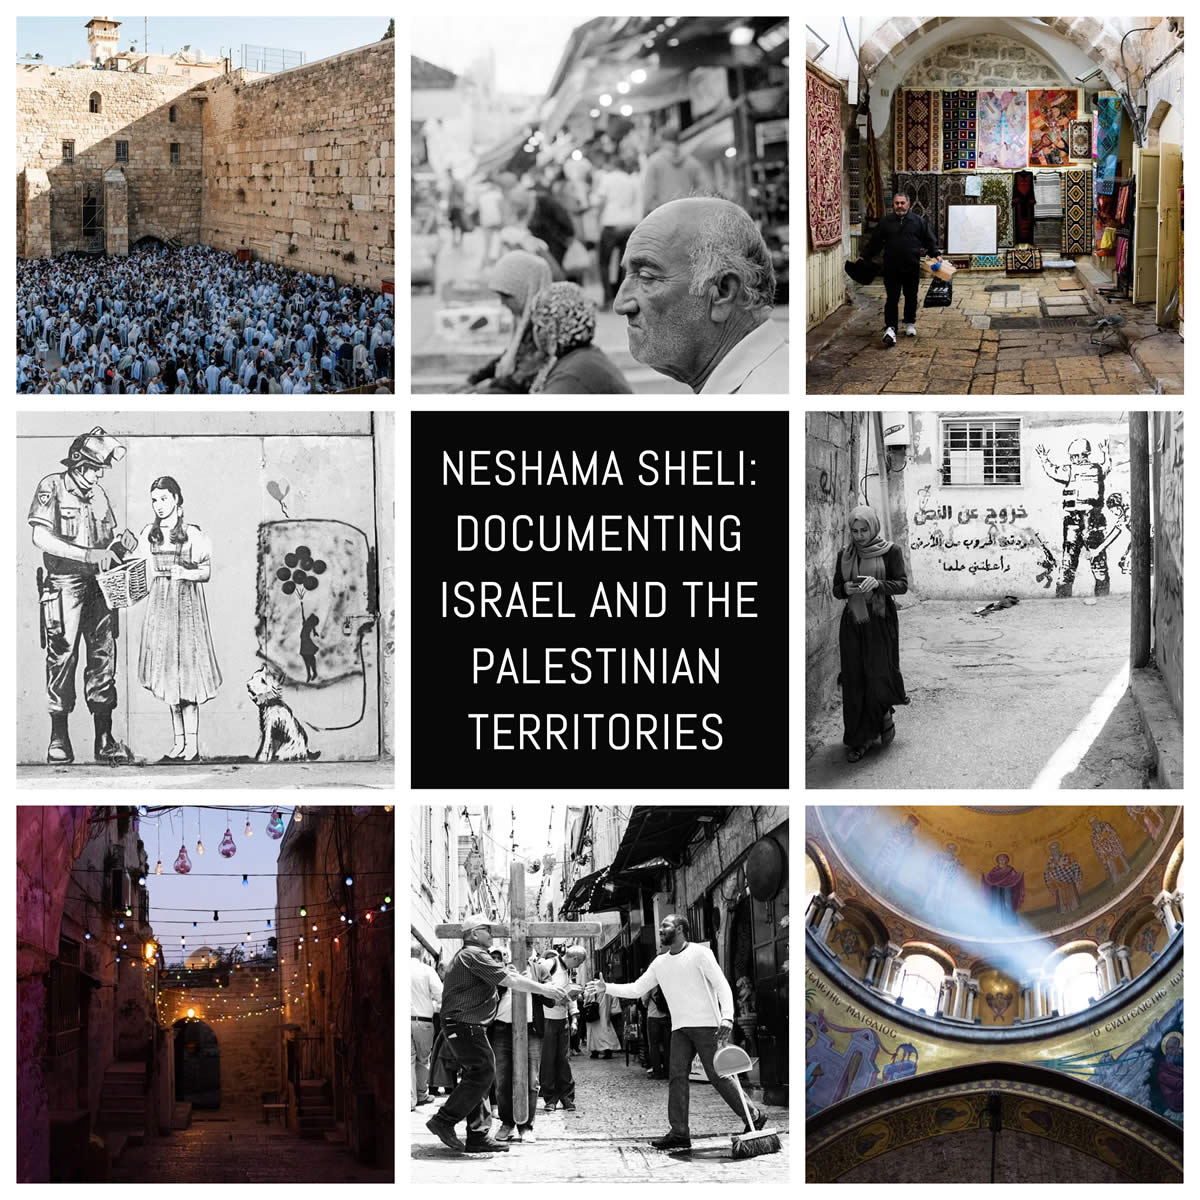 Neshama Sheli: Documenting Israel and the Palestinian territories